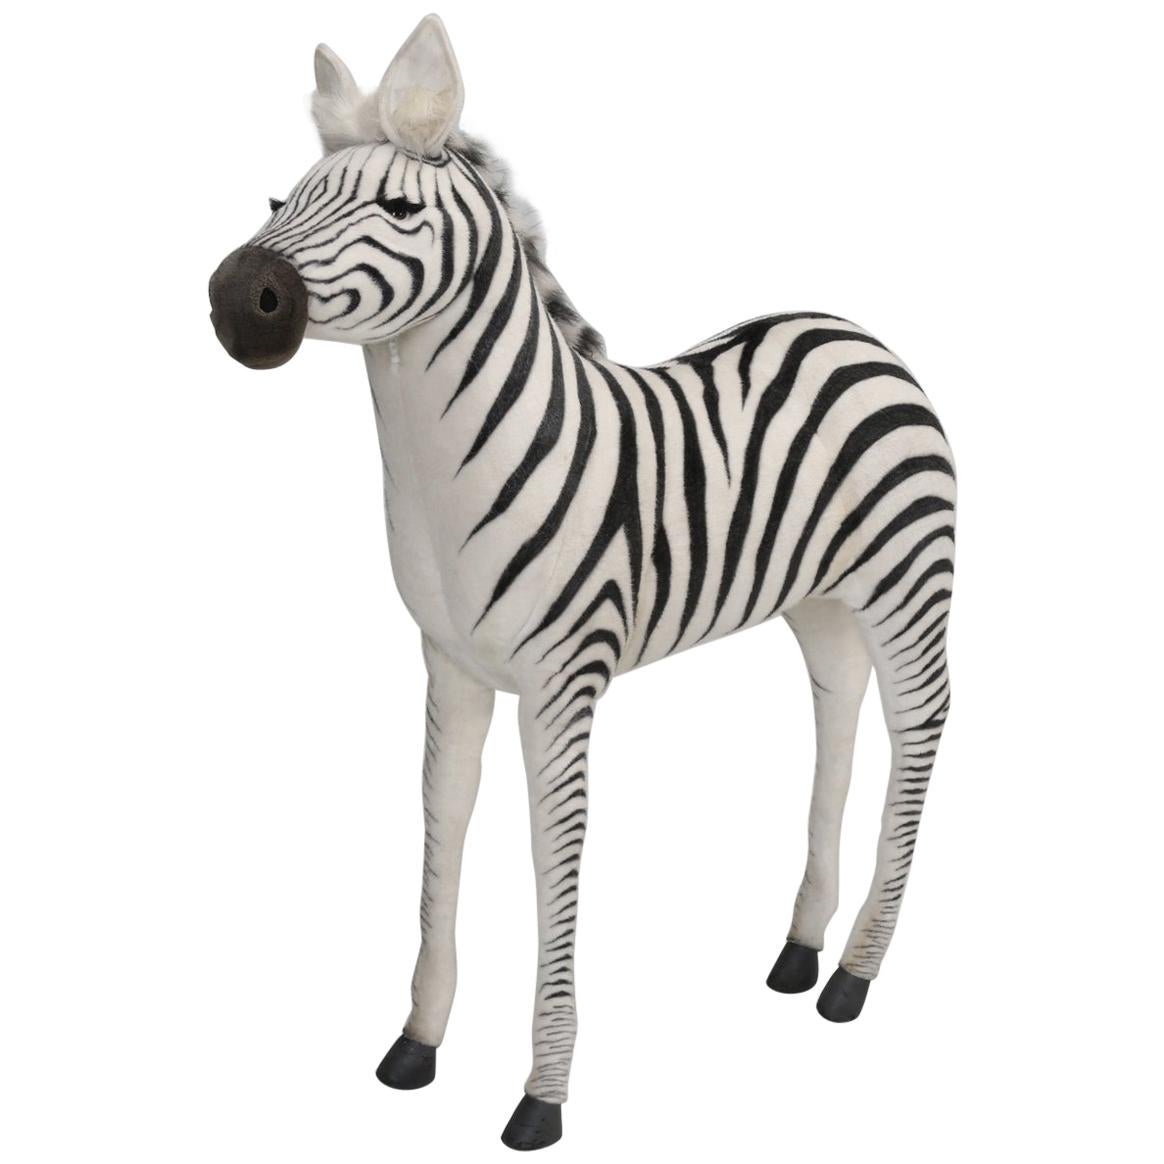 Mechanical or Animated Huge Stuffed Zebra, by Hansa and Four Feet High